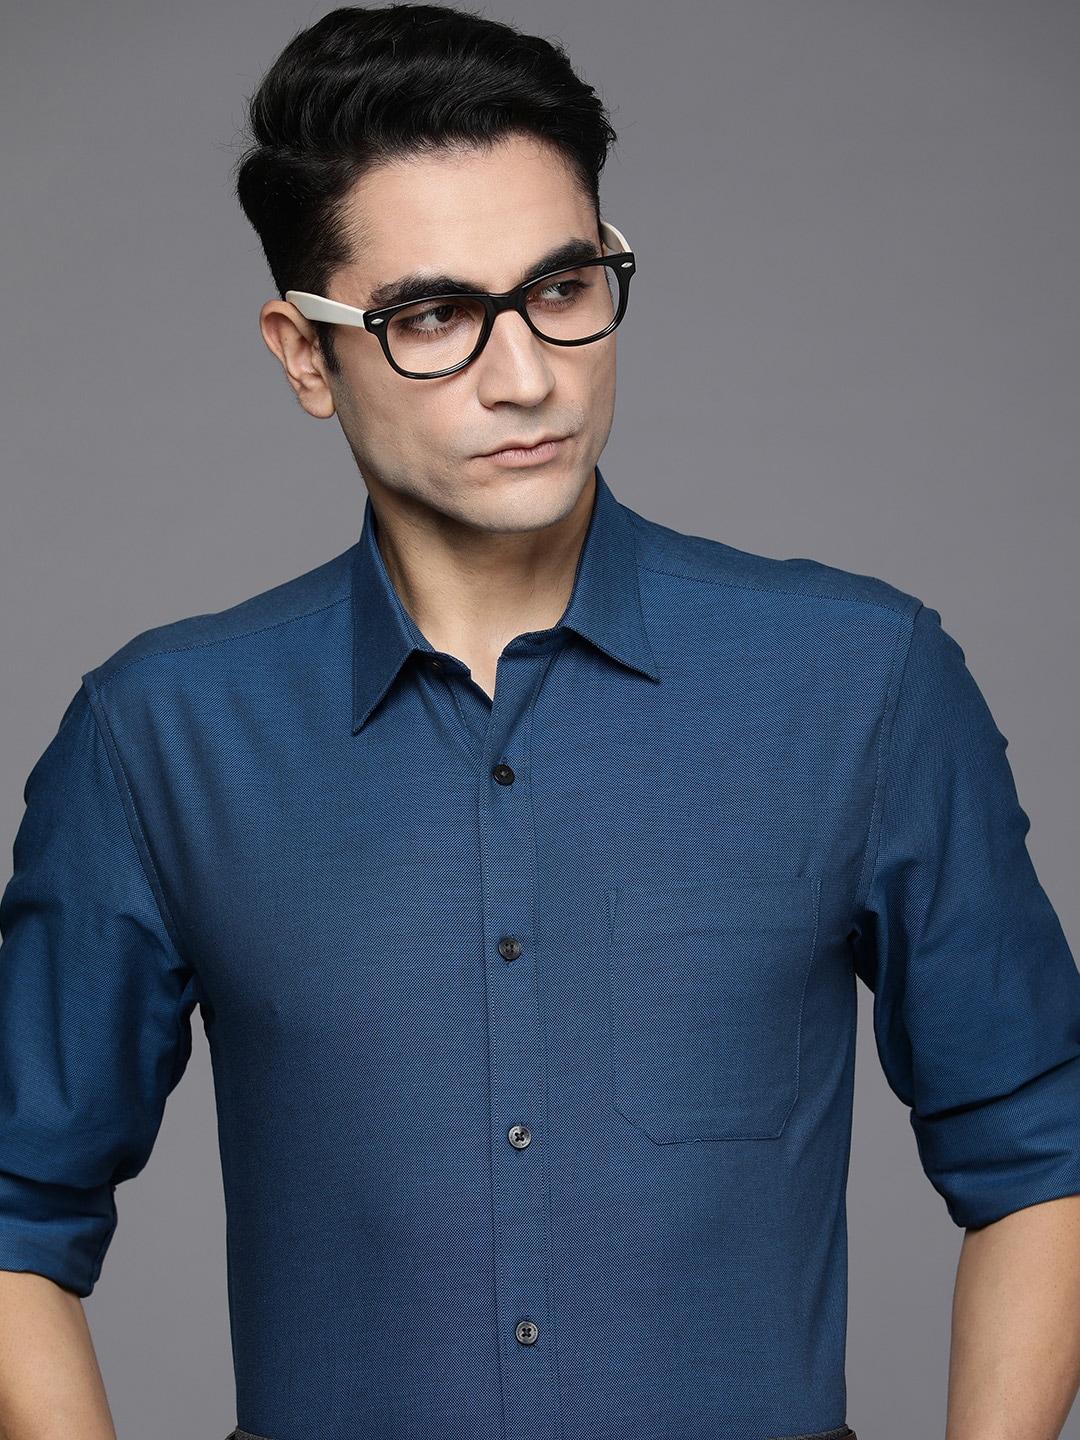 louis-philippe-men-navy-blue-self-design-textured-slim-fit-pure-cotton-formal-shirt